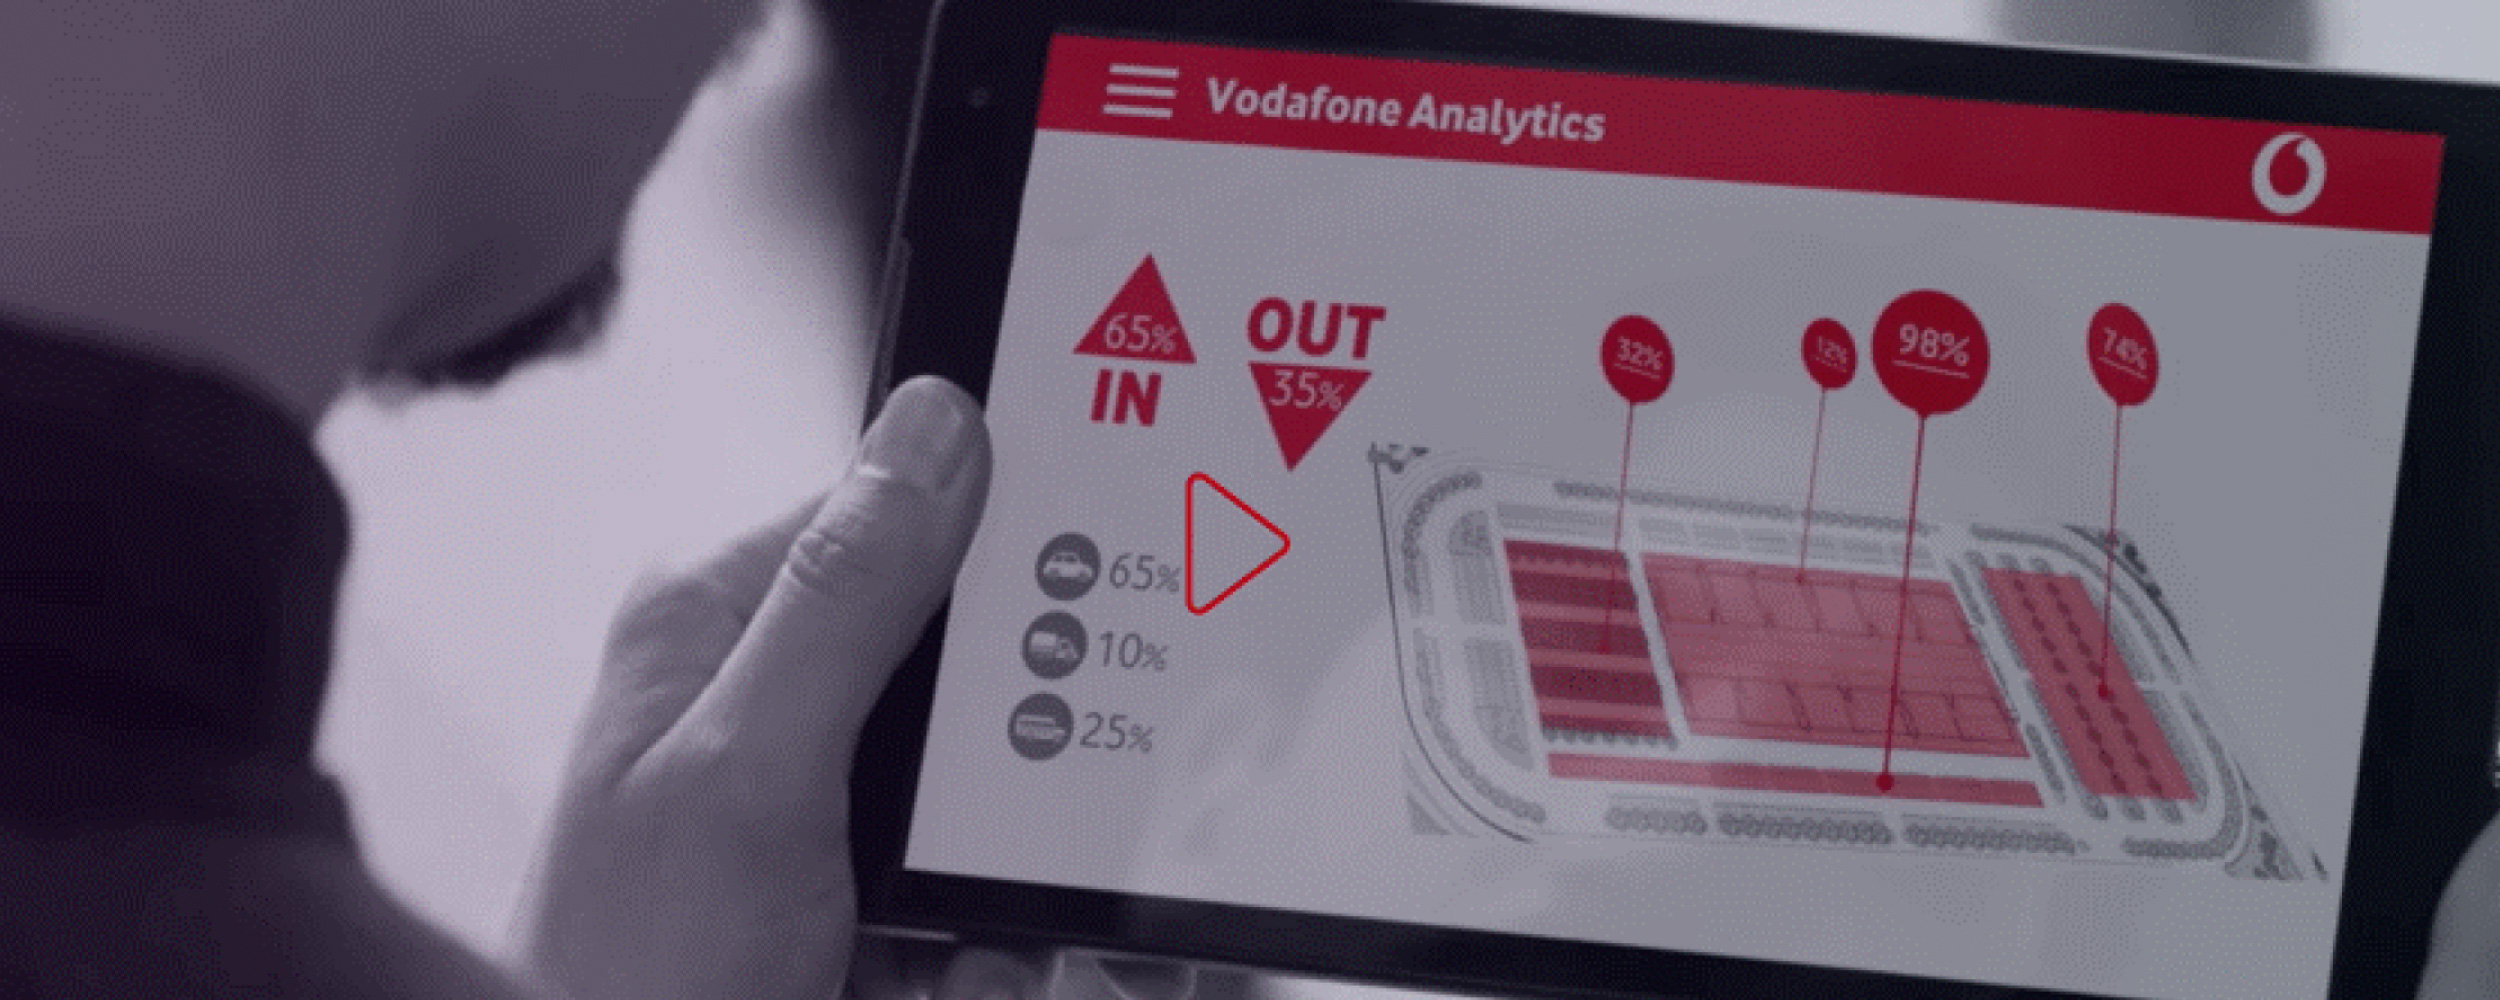 Customer Analytics for Vodafone